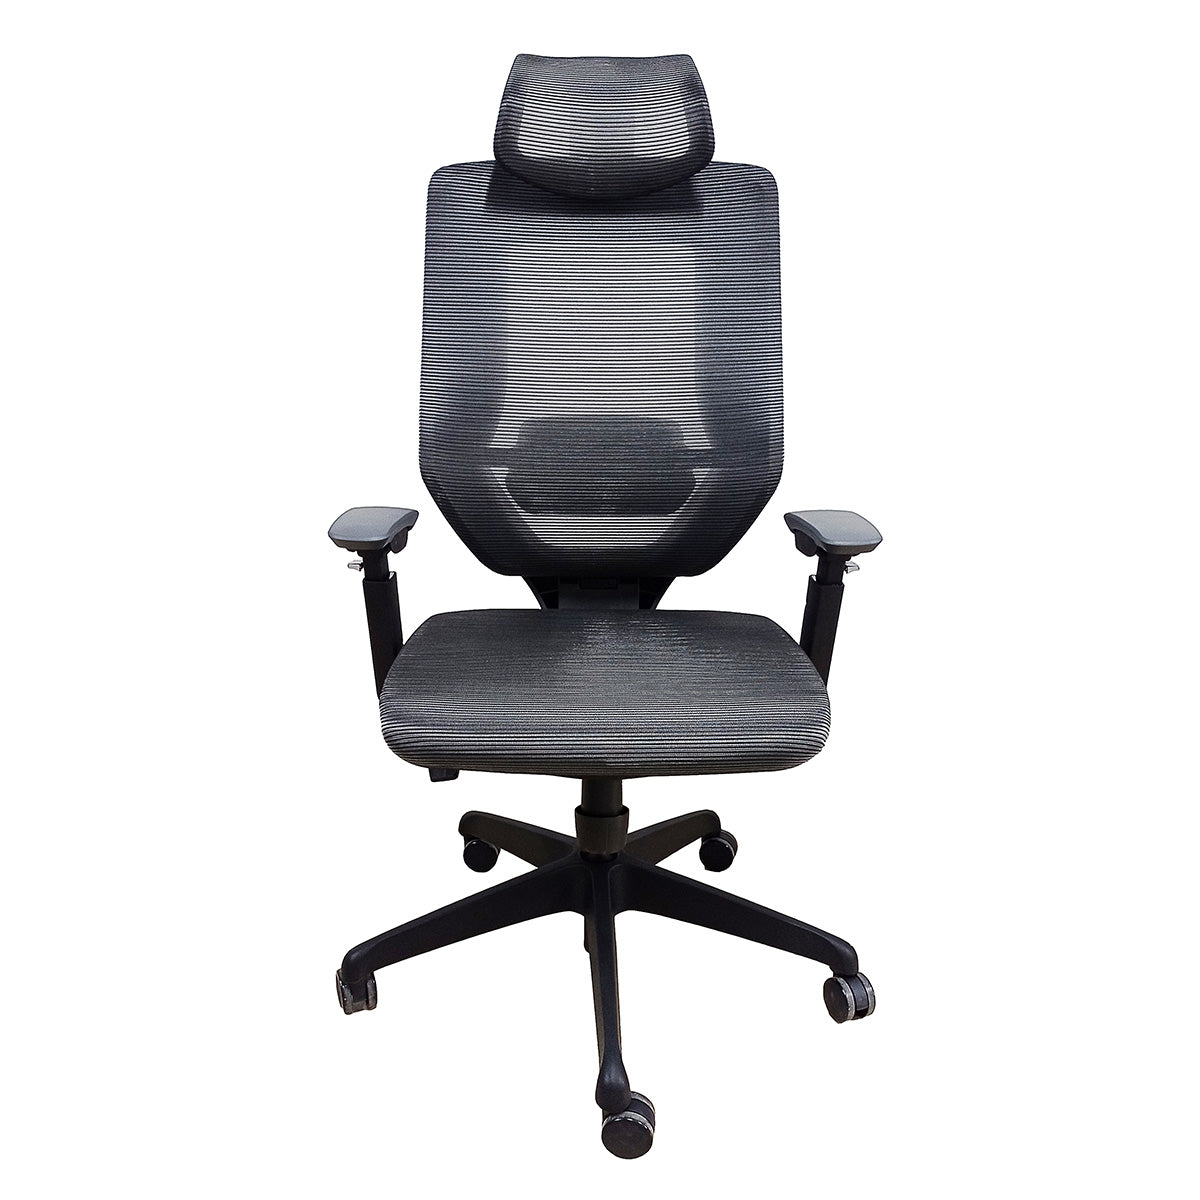 ERGOWORKS T08 High Back Ergonomic Chair, EW-T08DH